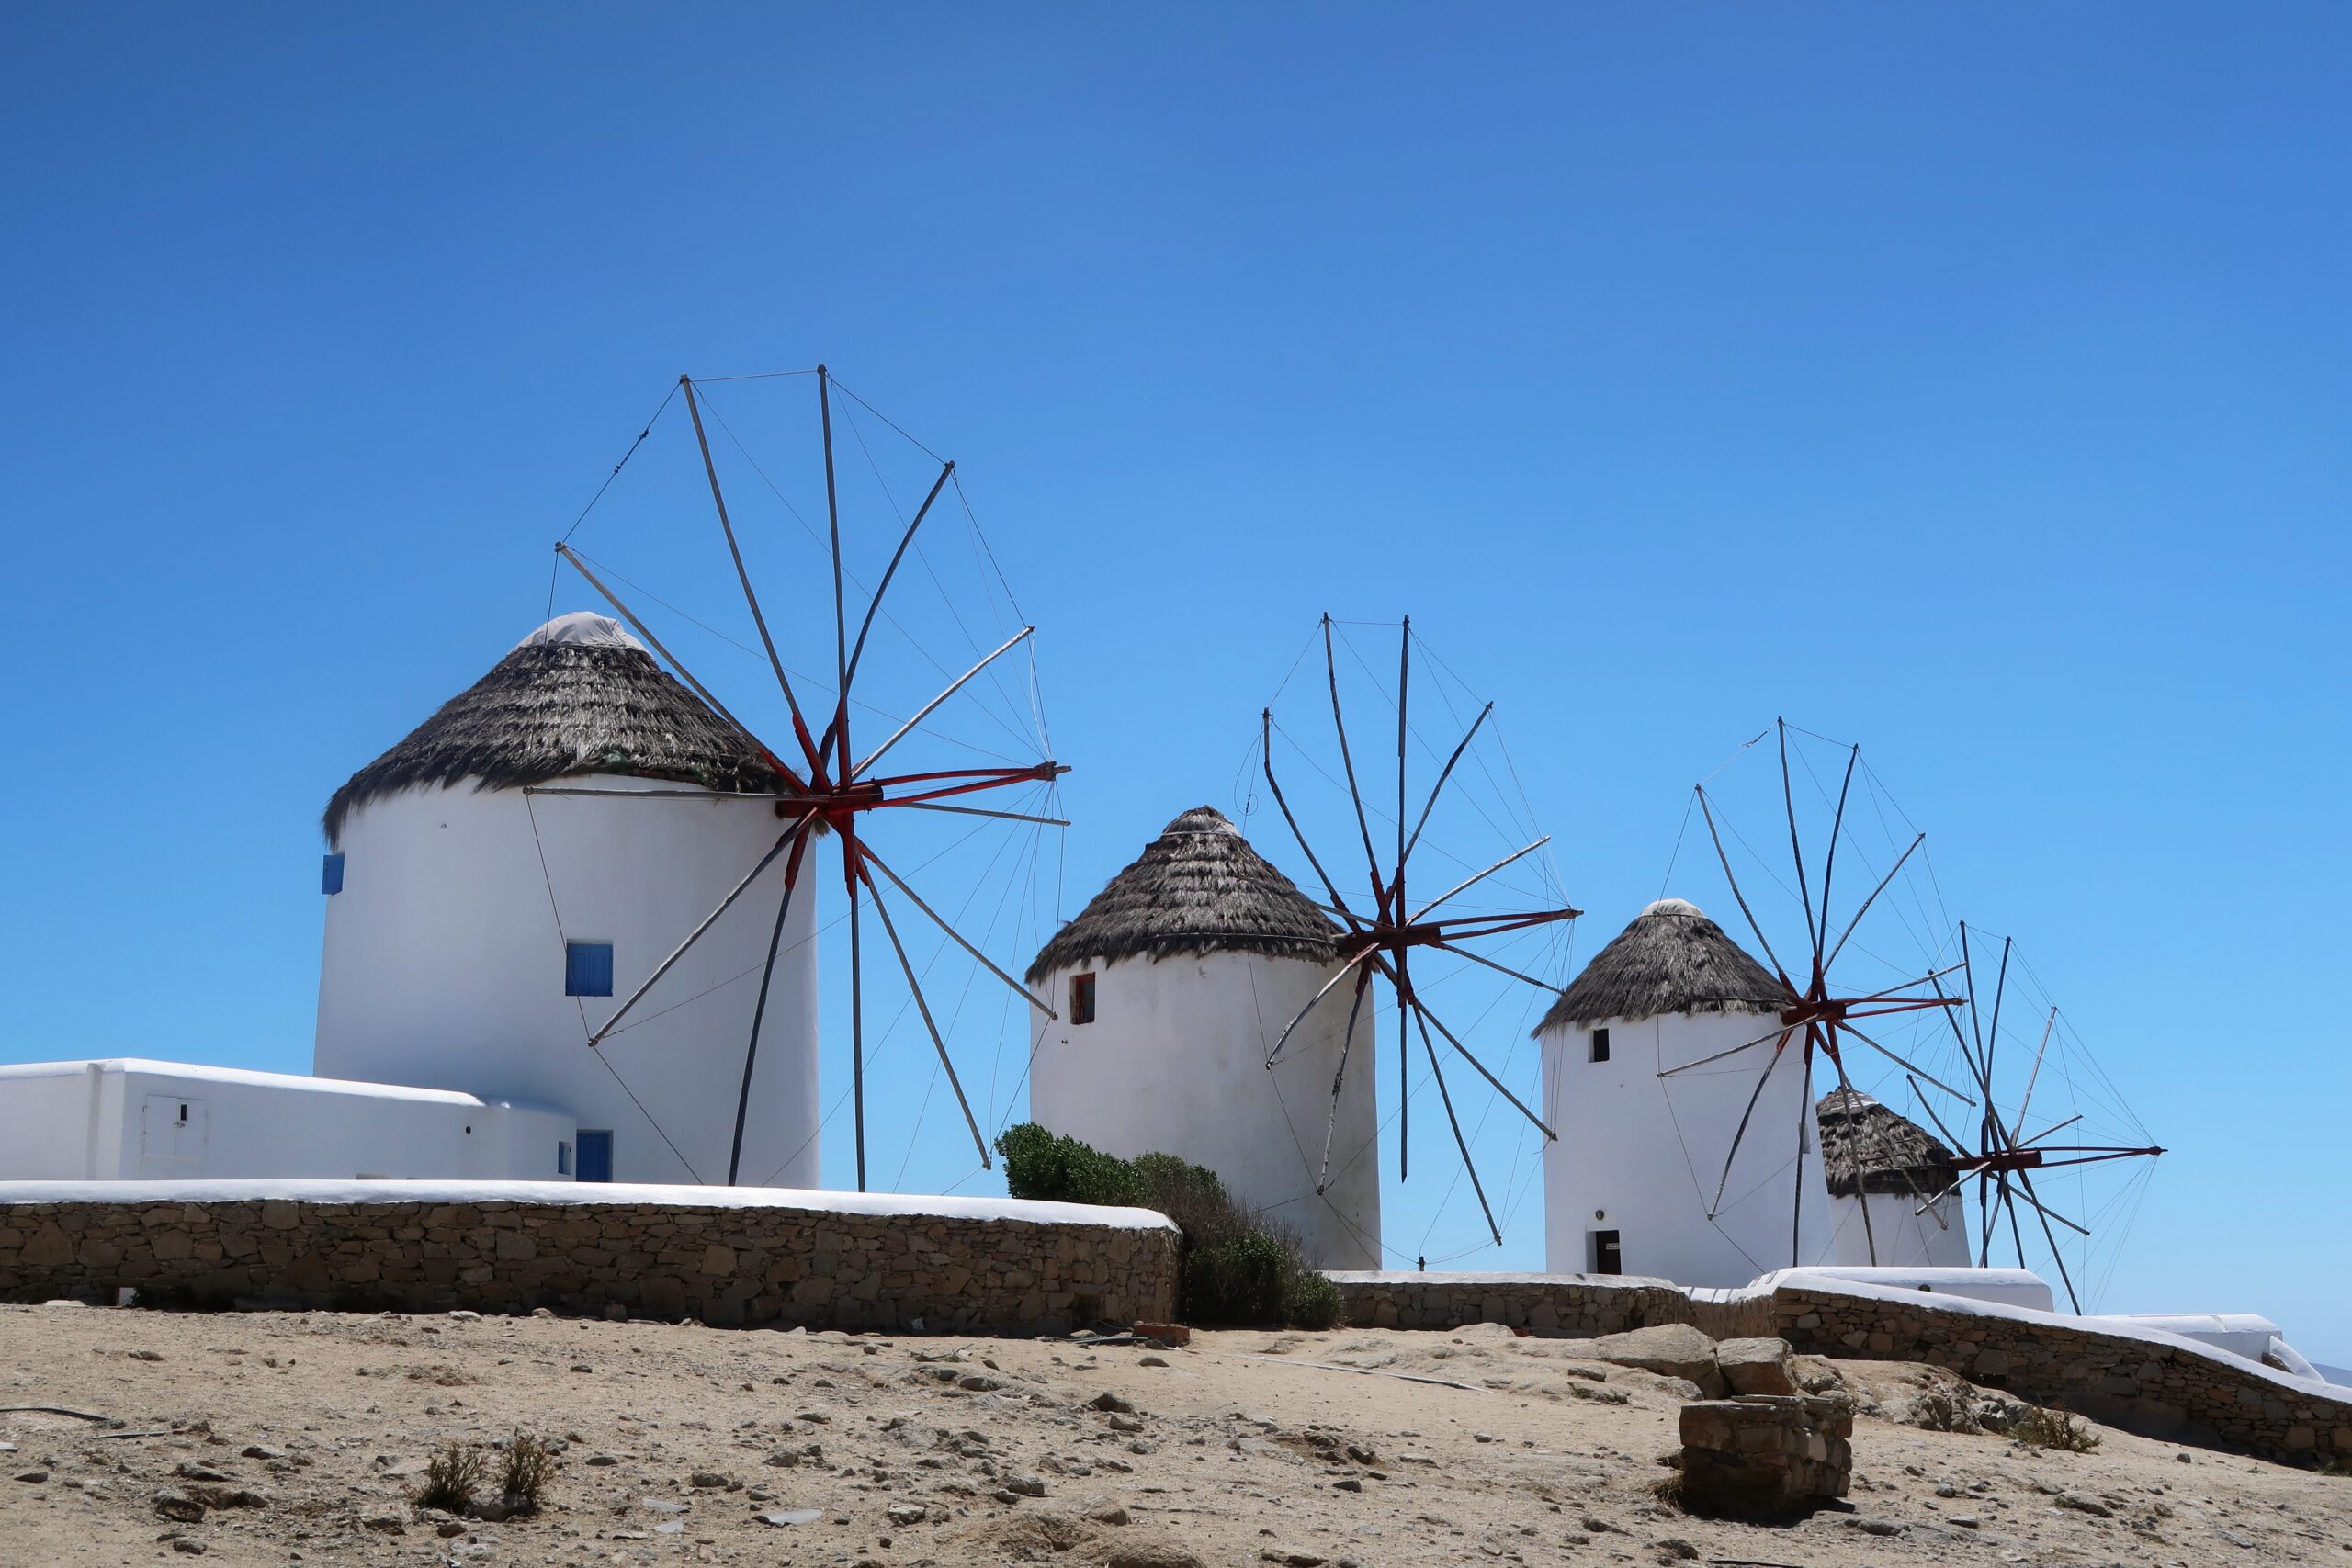 Windmills Mykonos - Why You Should Visit Mykonos - Uk Travel Blogger